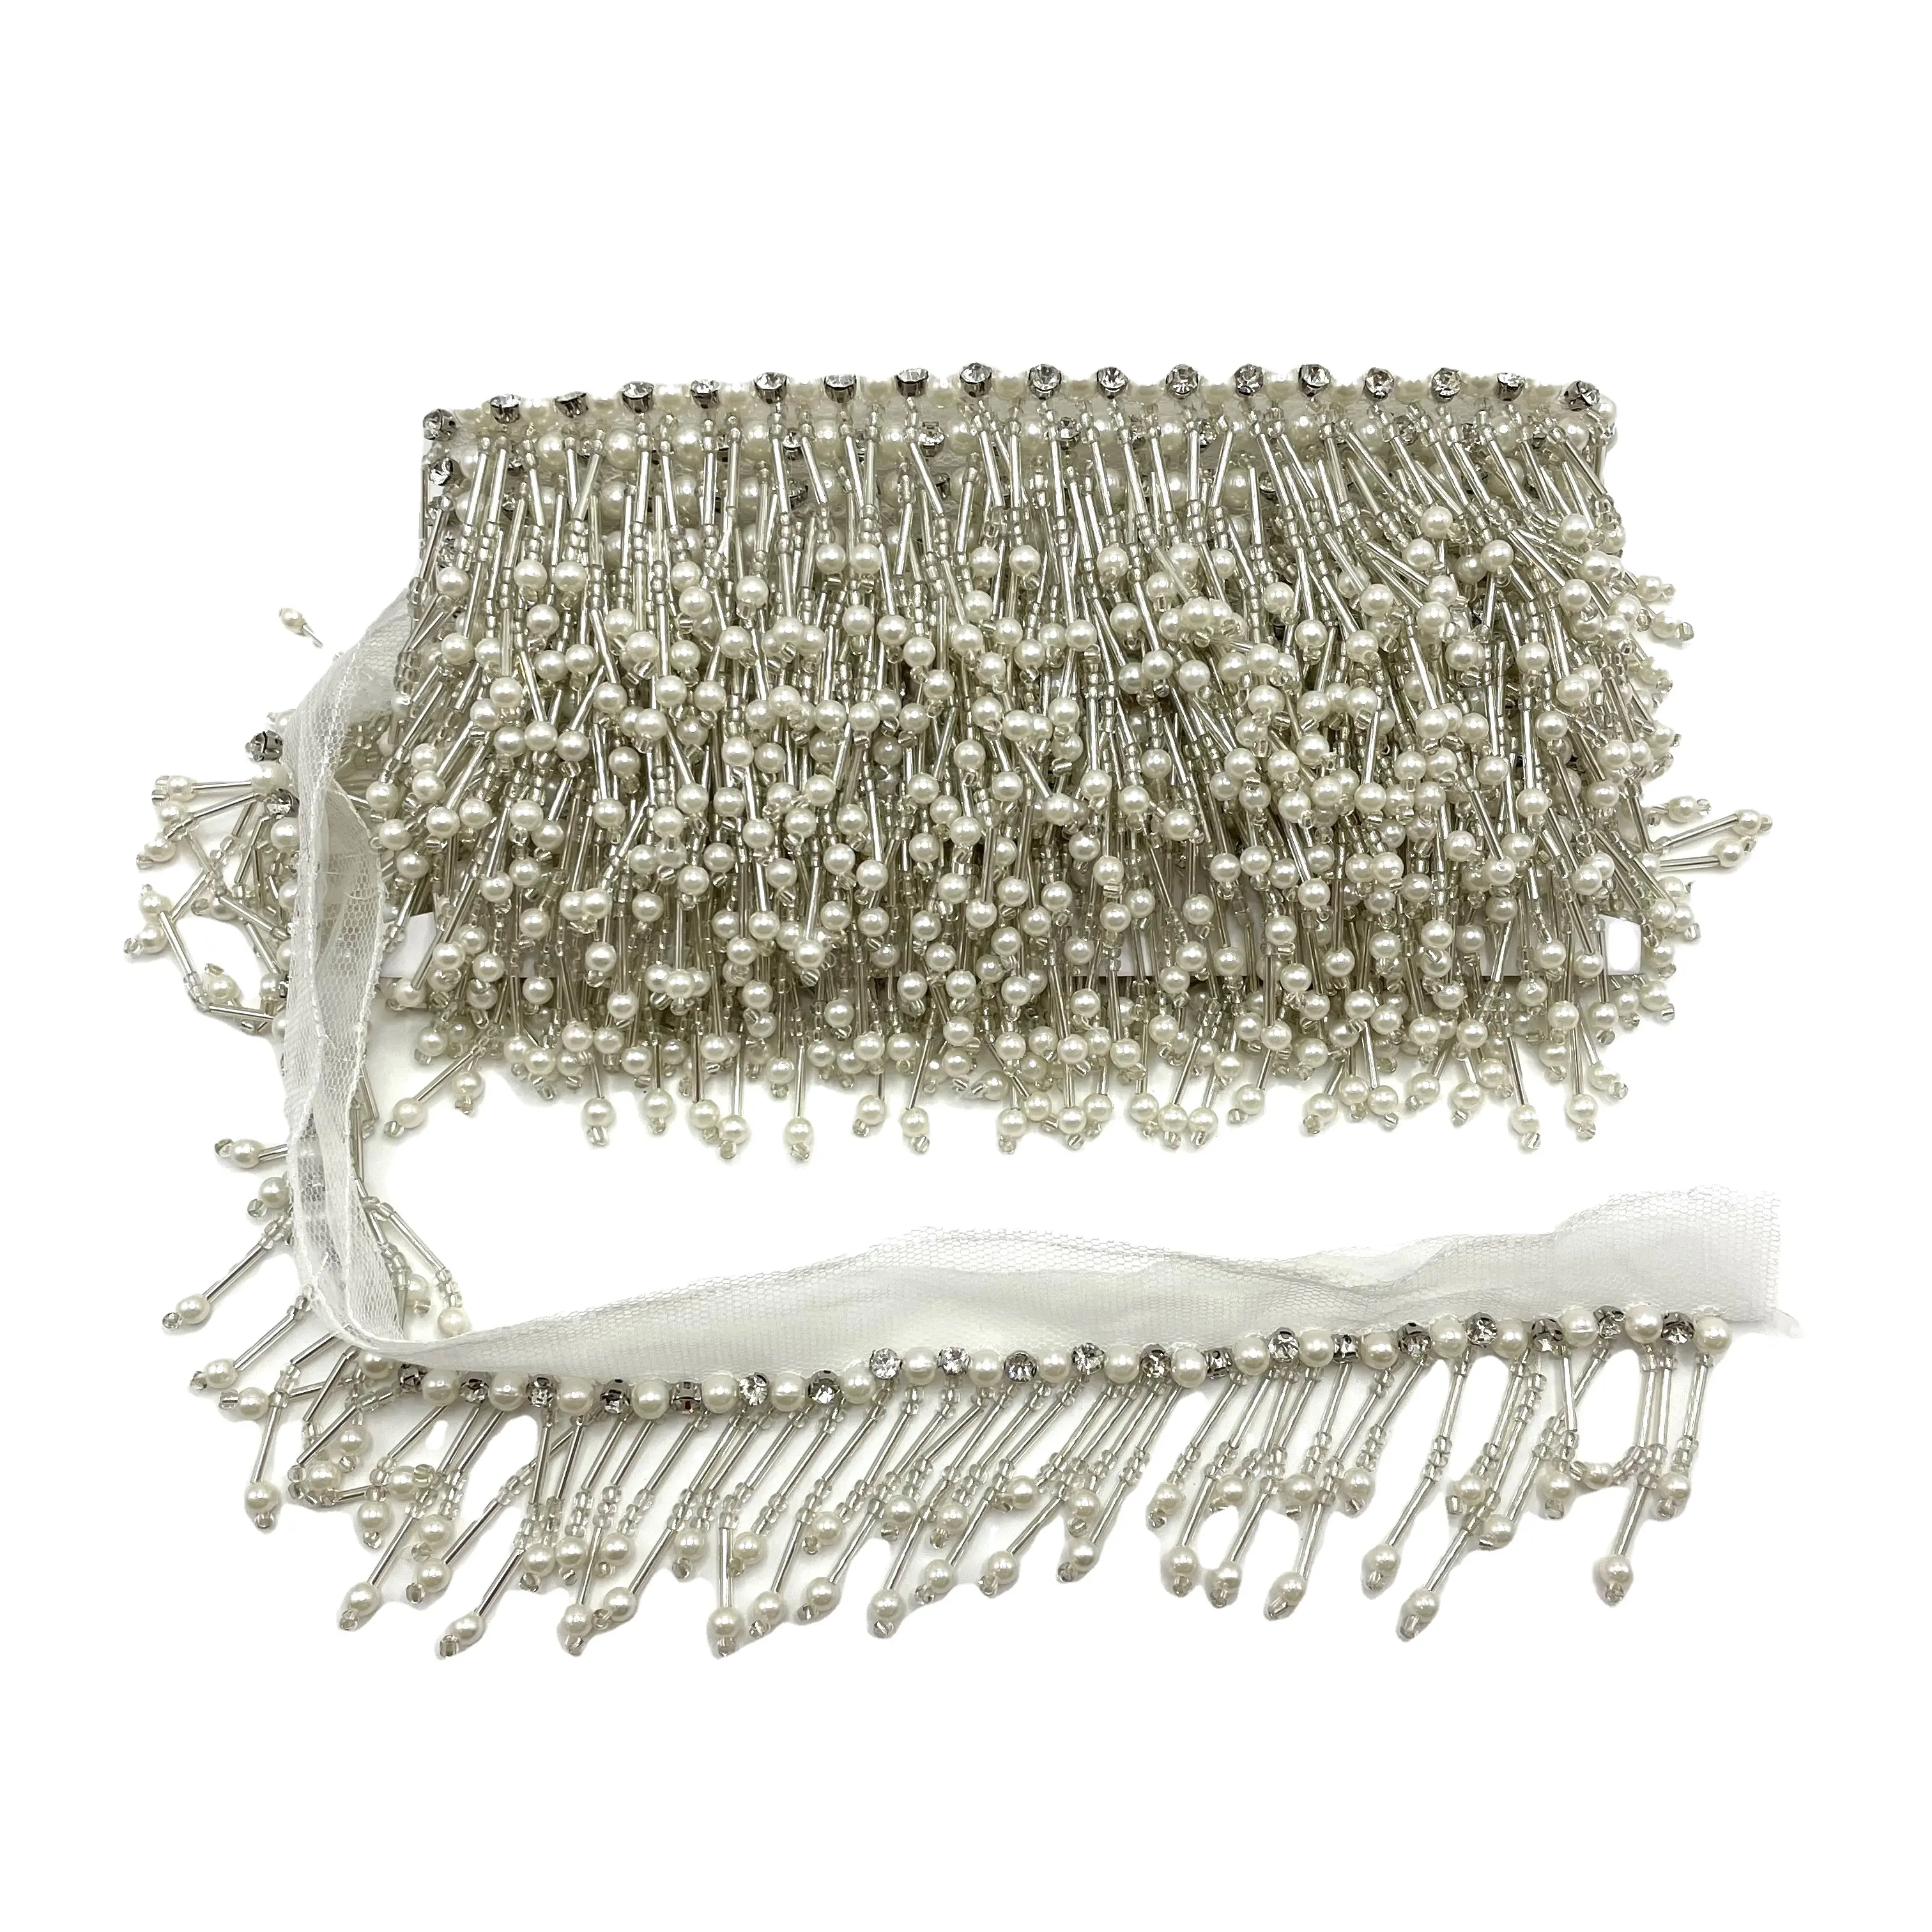 Handmade beaded crystal glass webbing fringe lace trim clothing curtain decoration